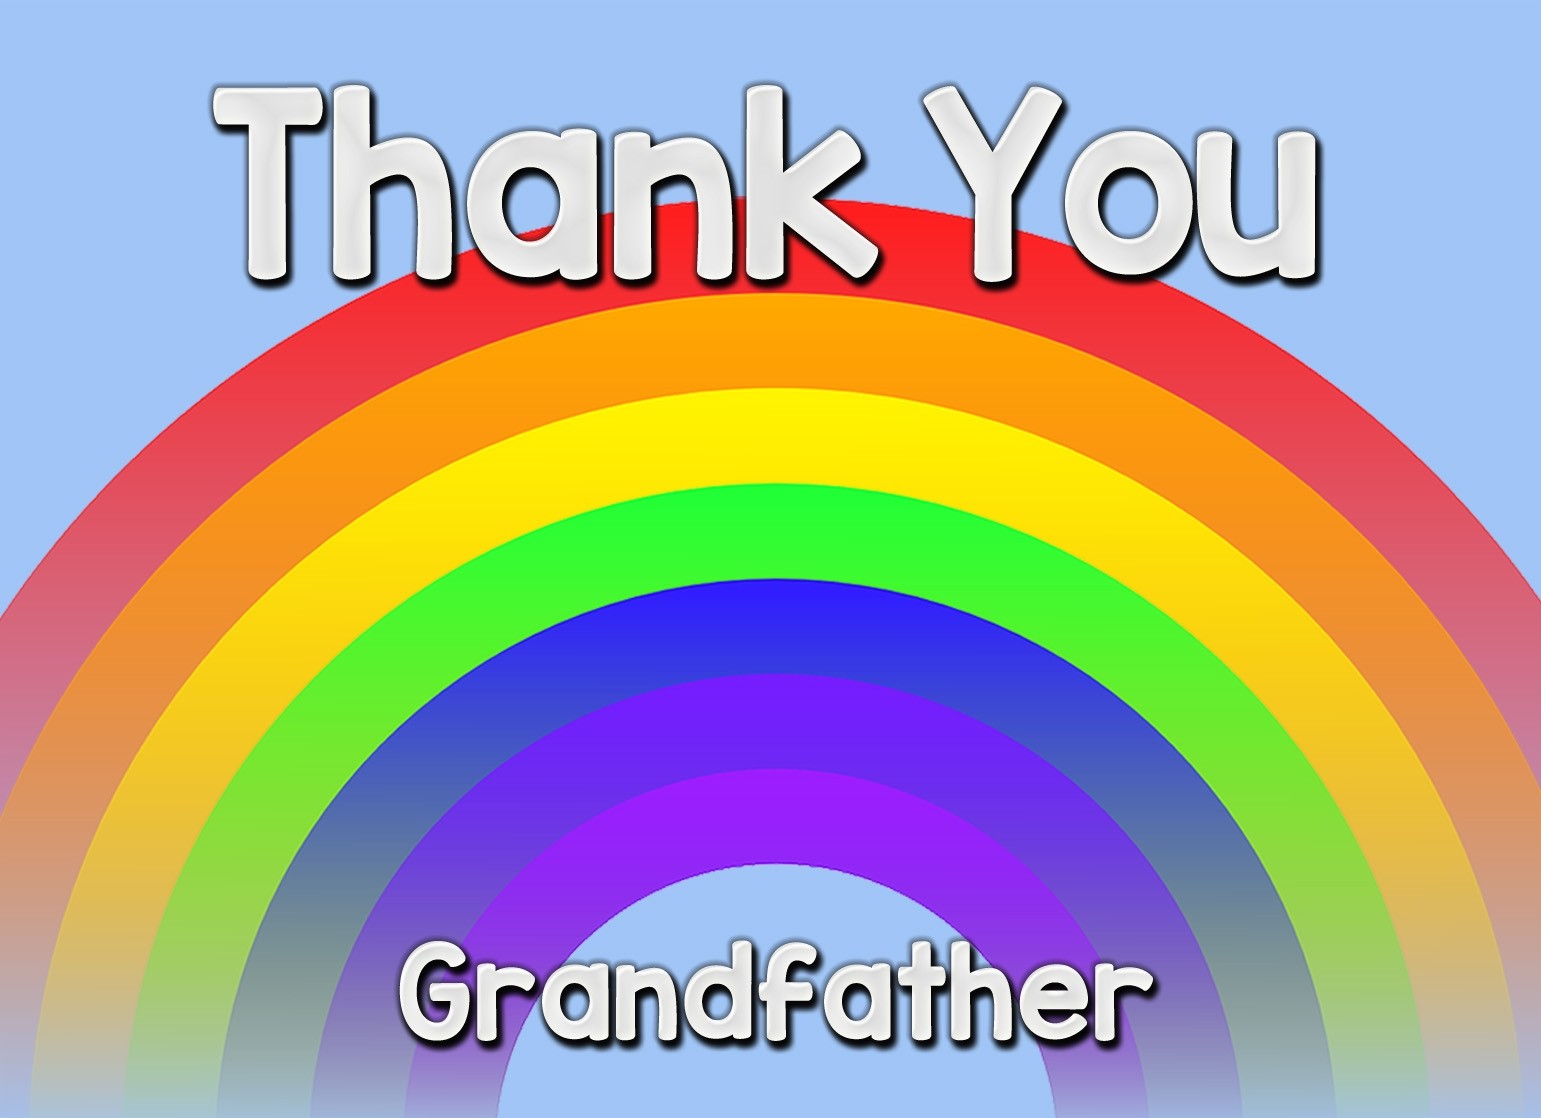 Thank You 'Grandfather' Rainbow Greeting Card